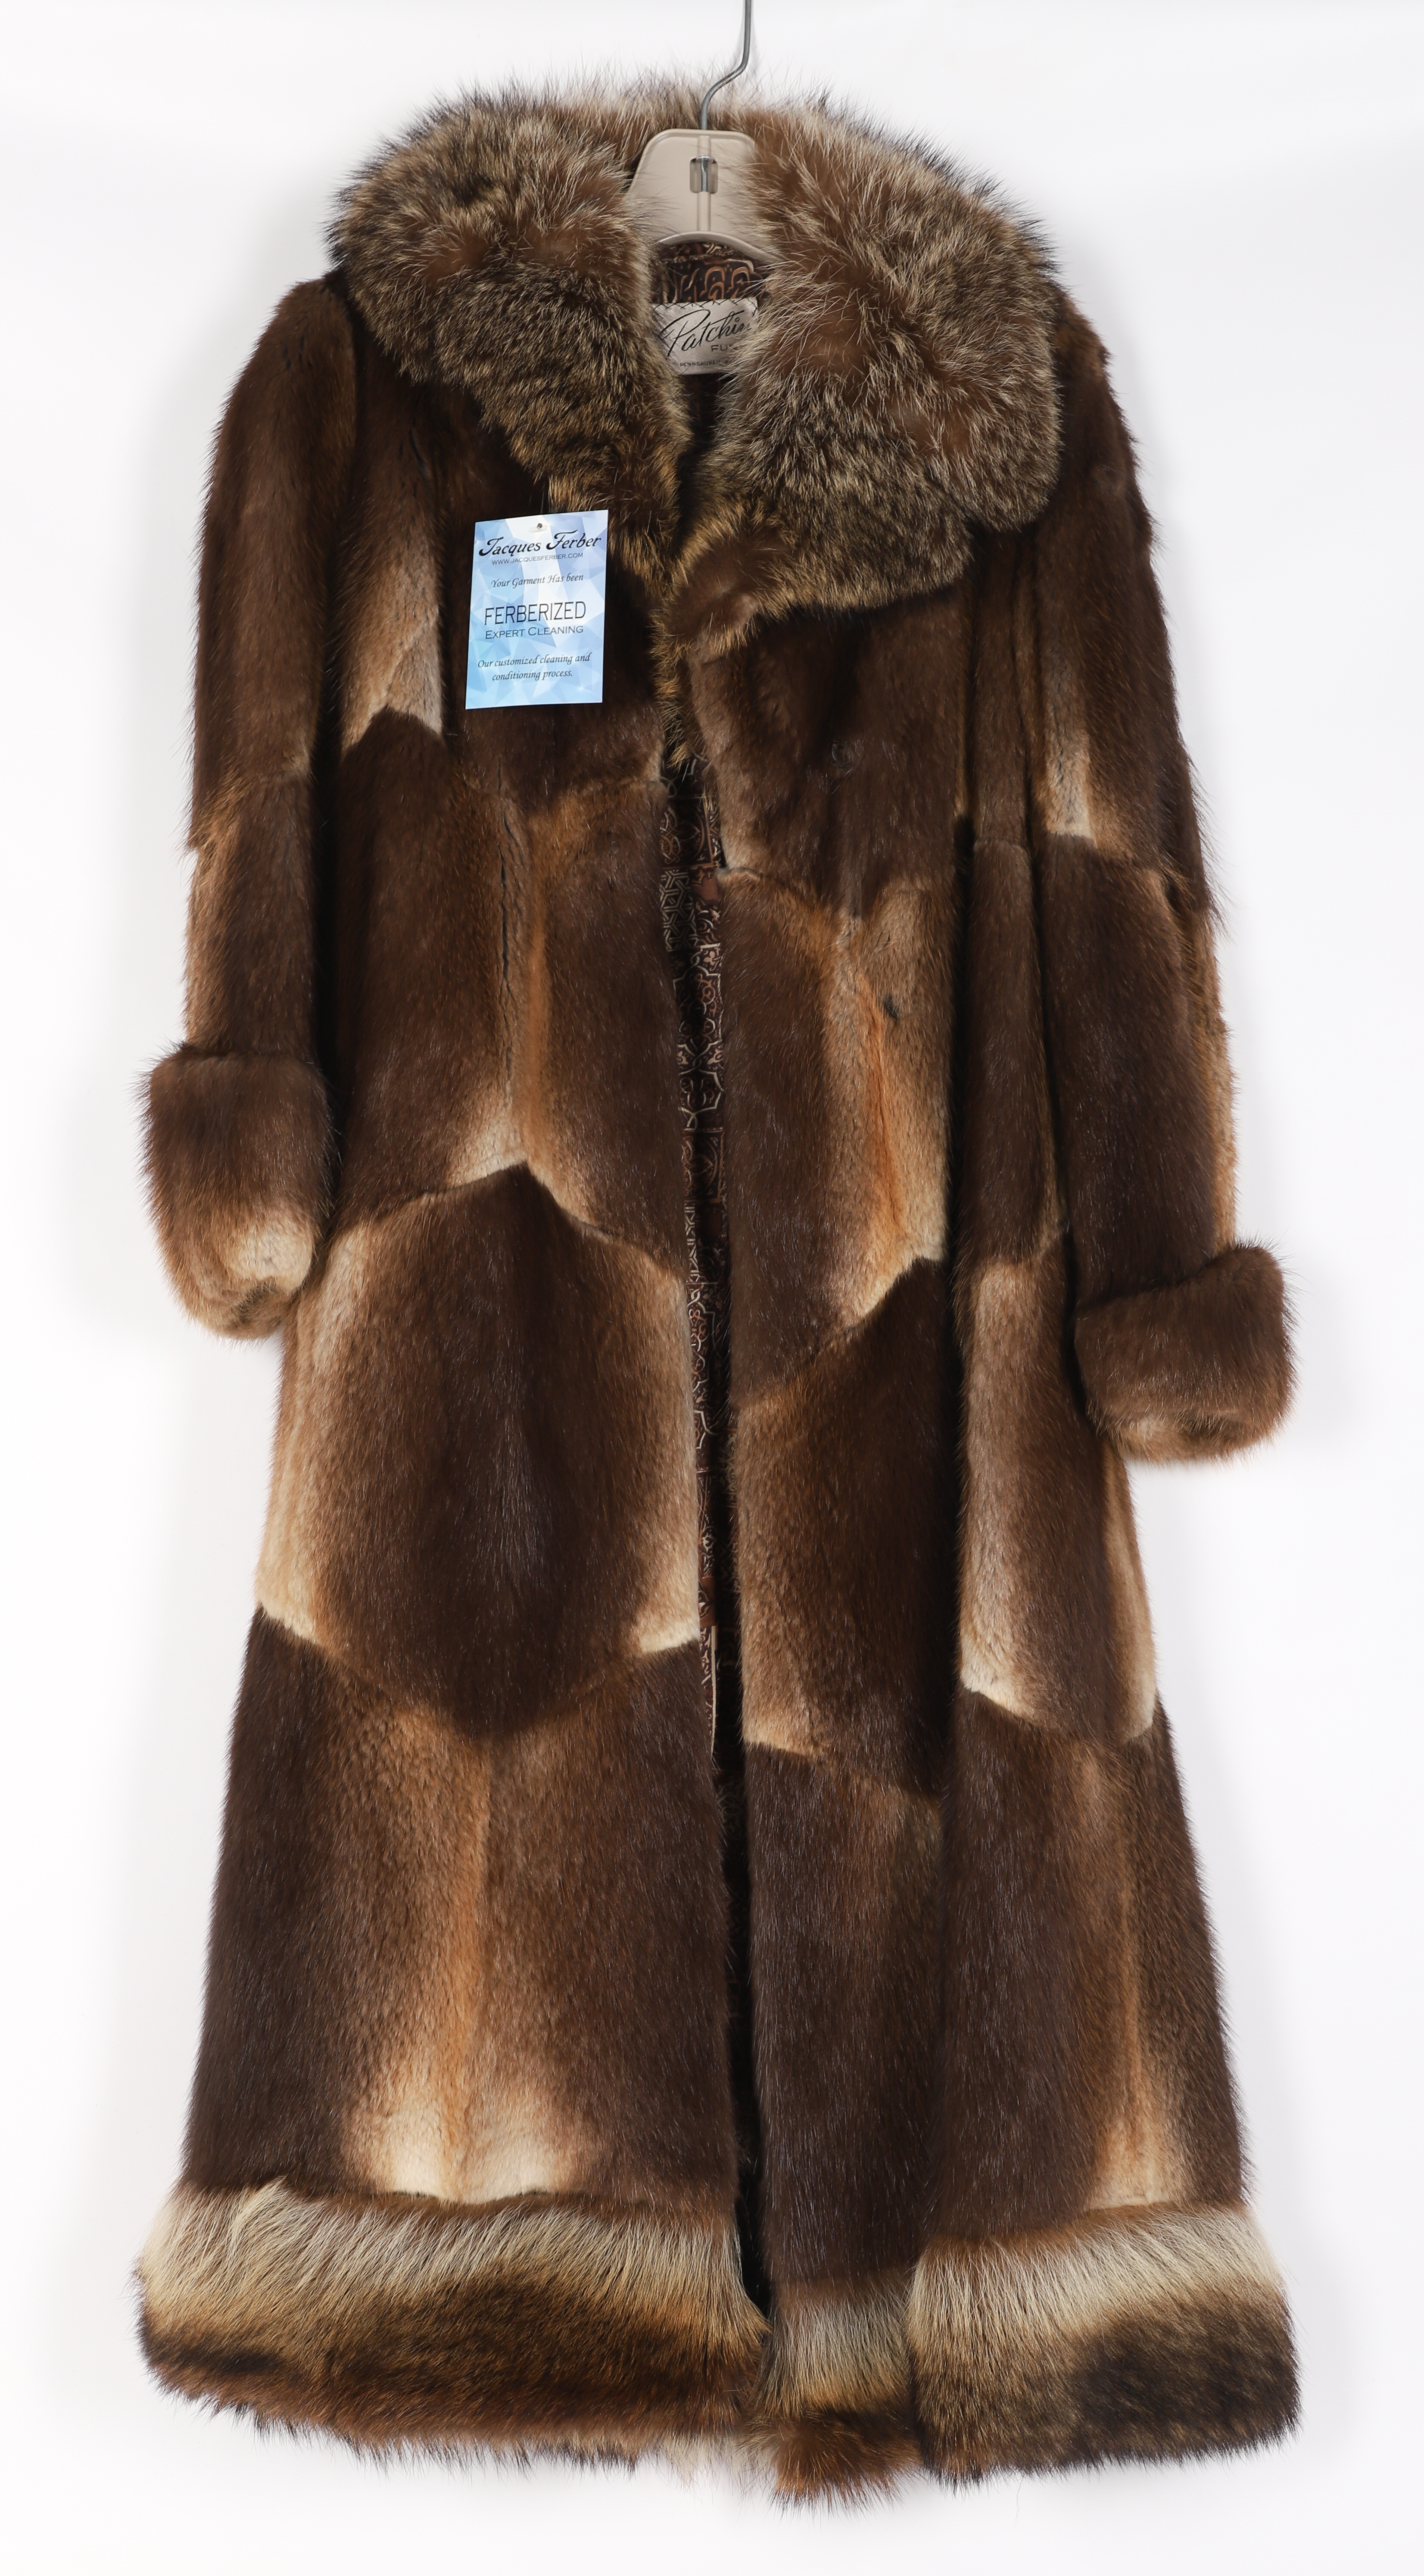 Patchin Furs full length fur coat,